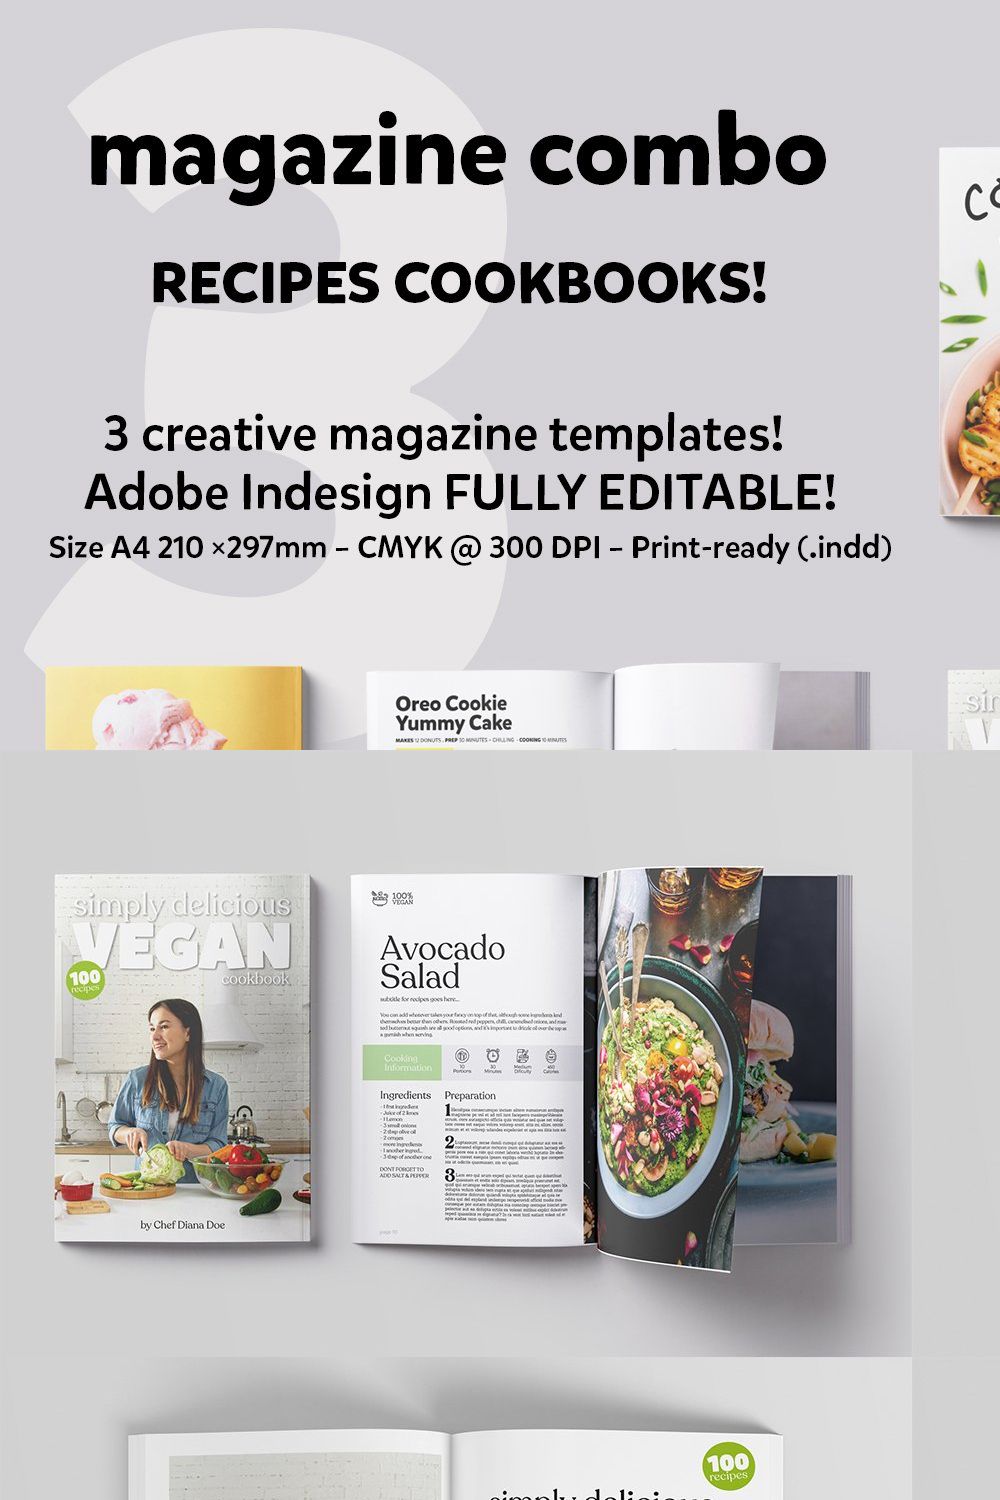 3 Magazines Recipes CookBooks Combo pinterest preview image.